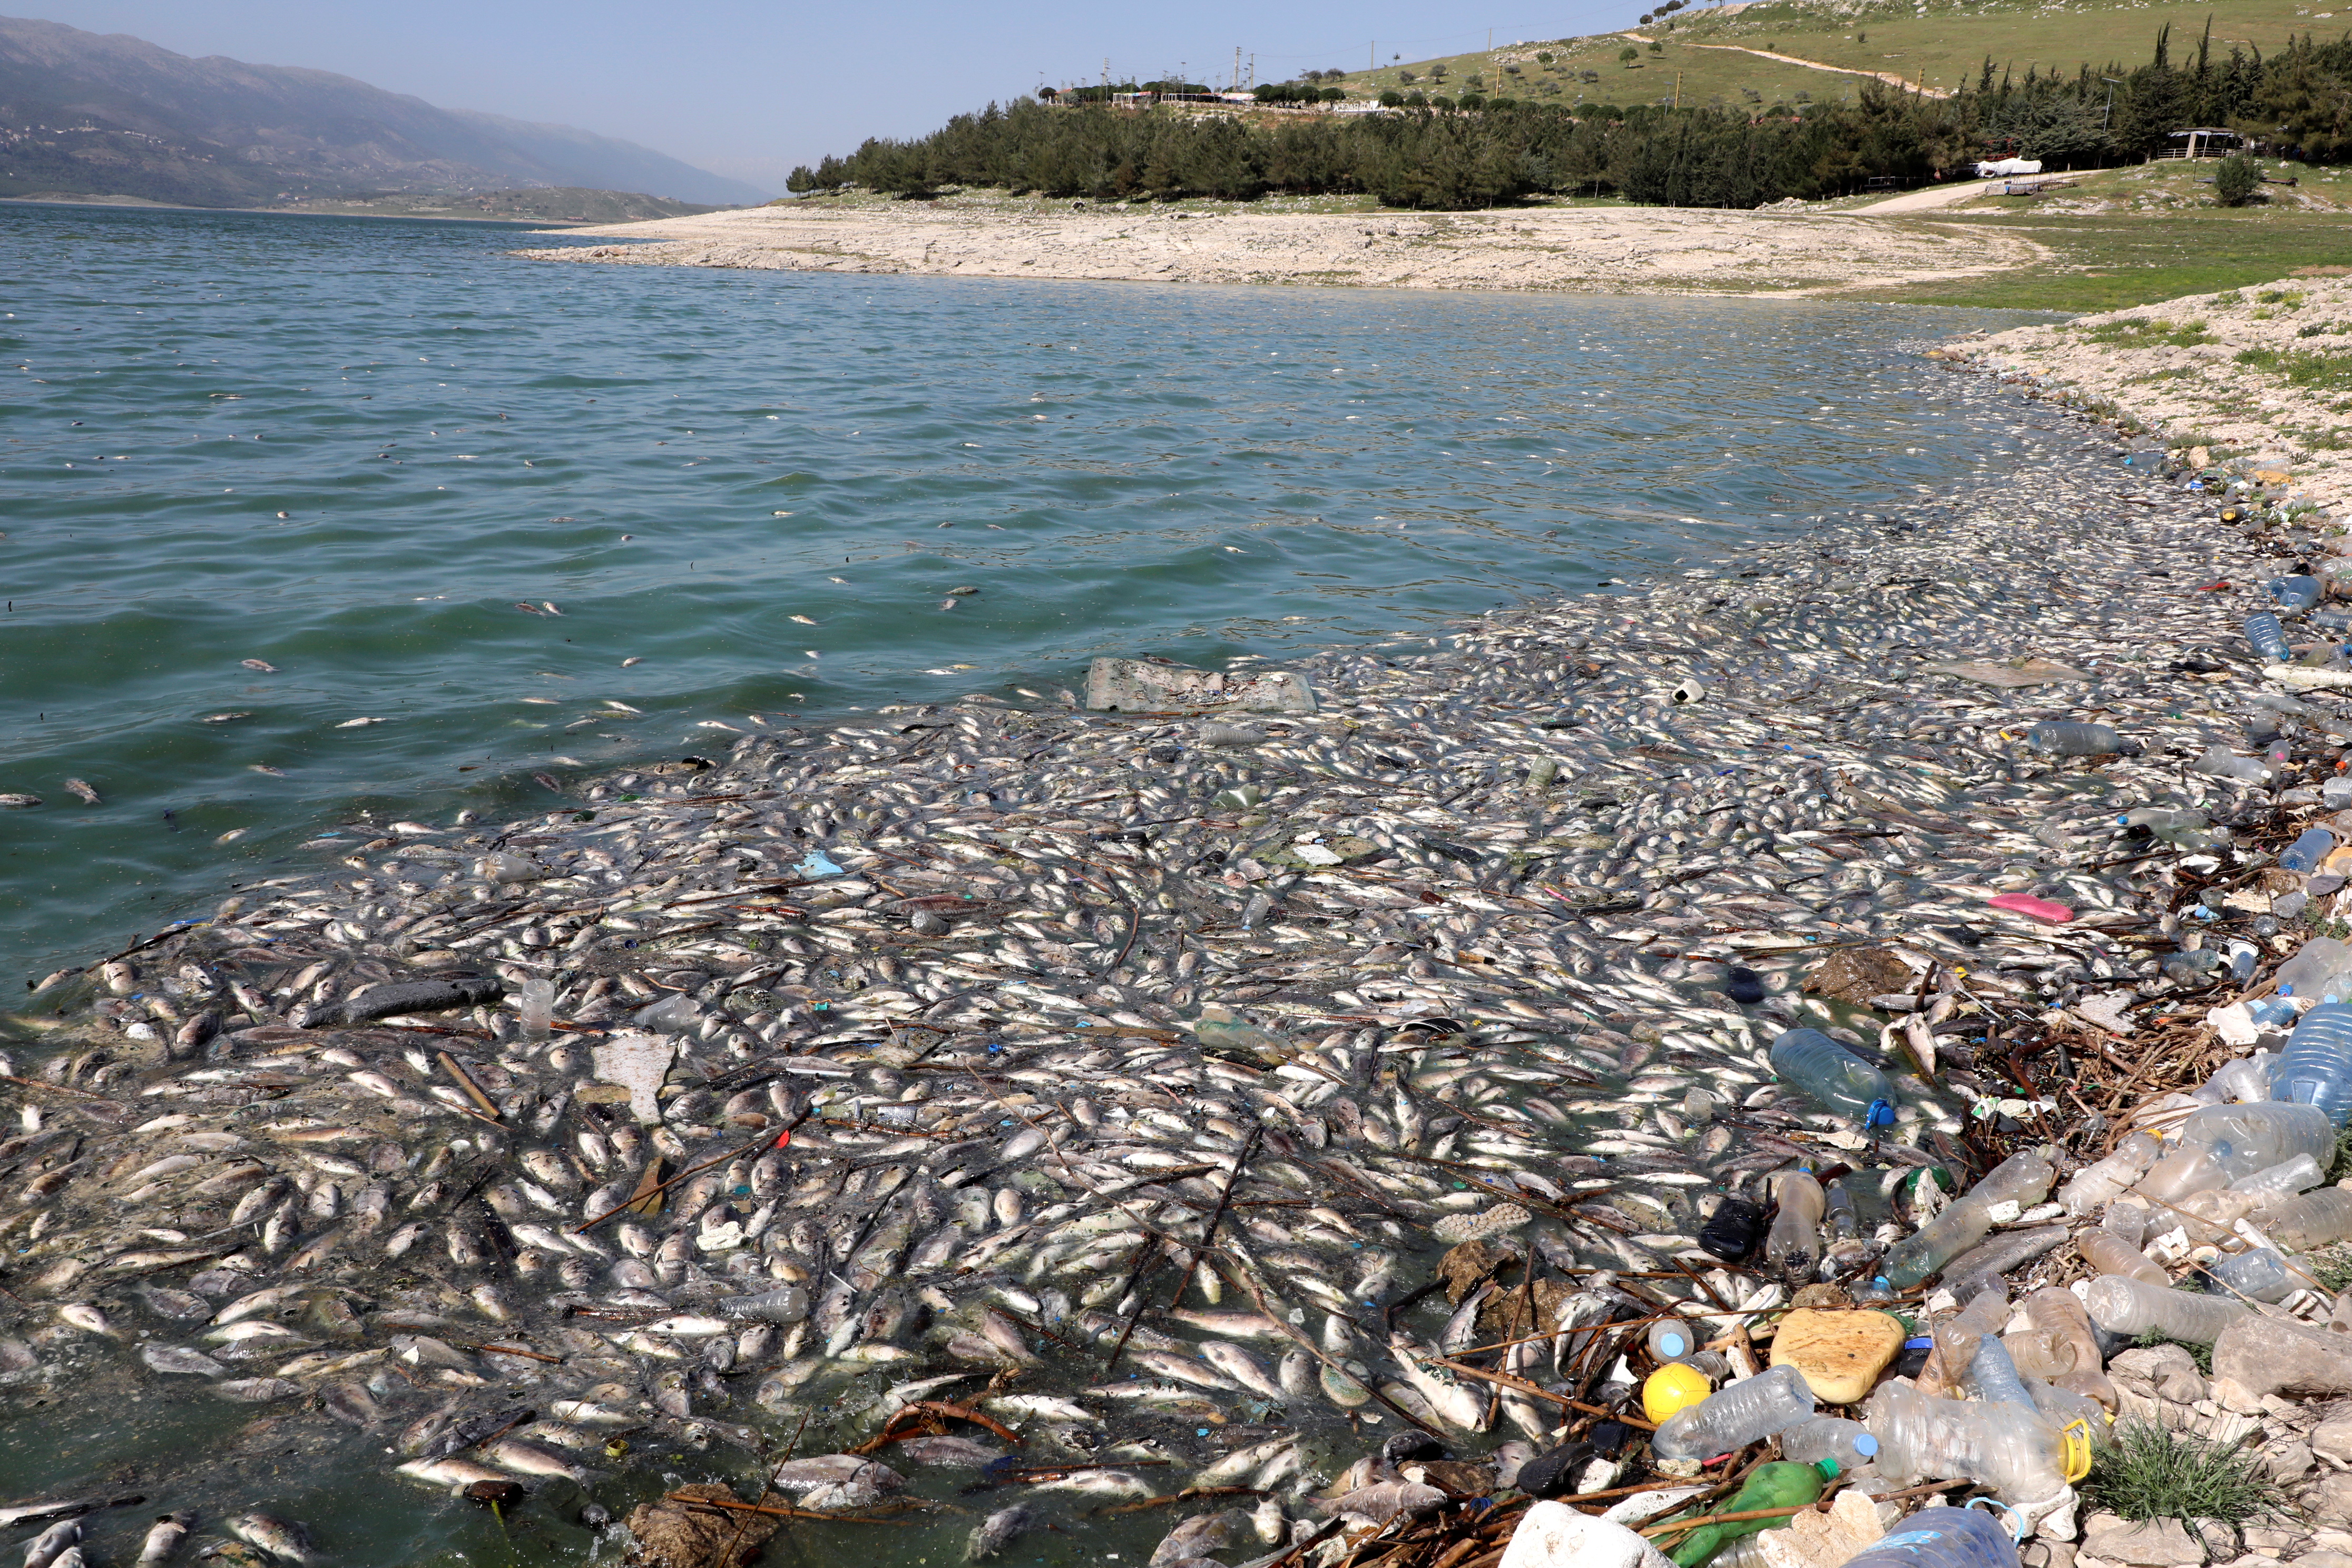 Dead fish are seen floating in Lake Qaraoun on the Litani River